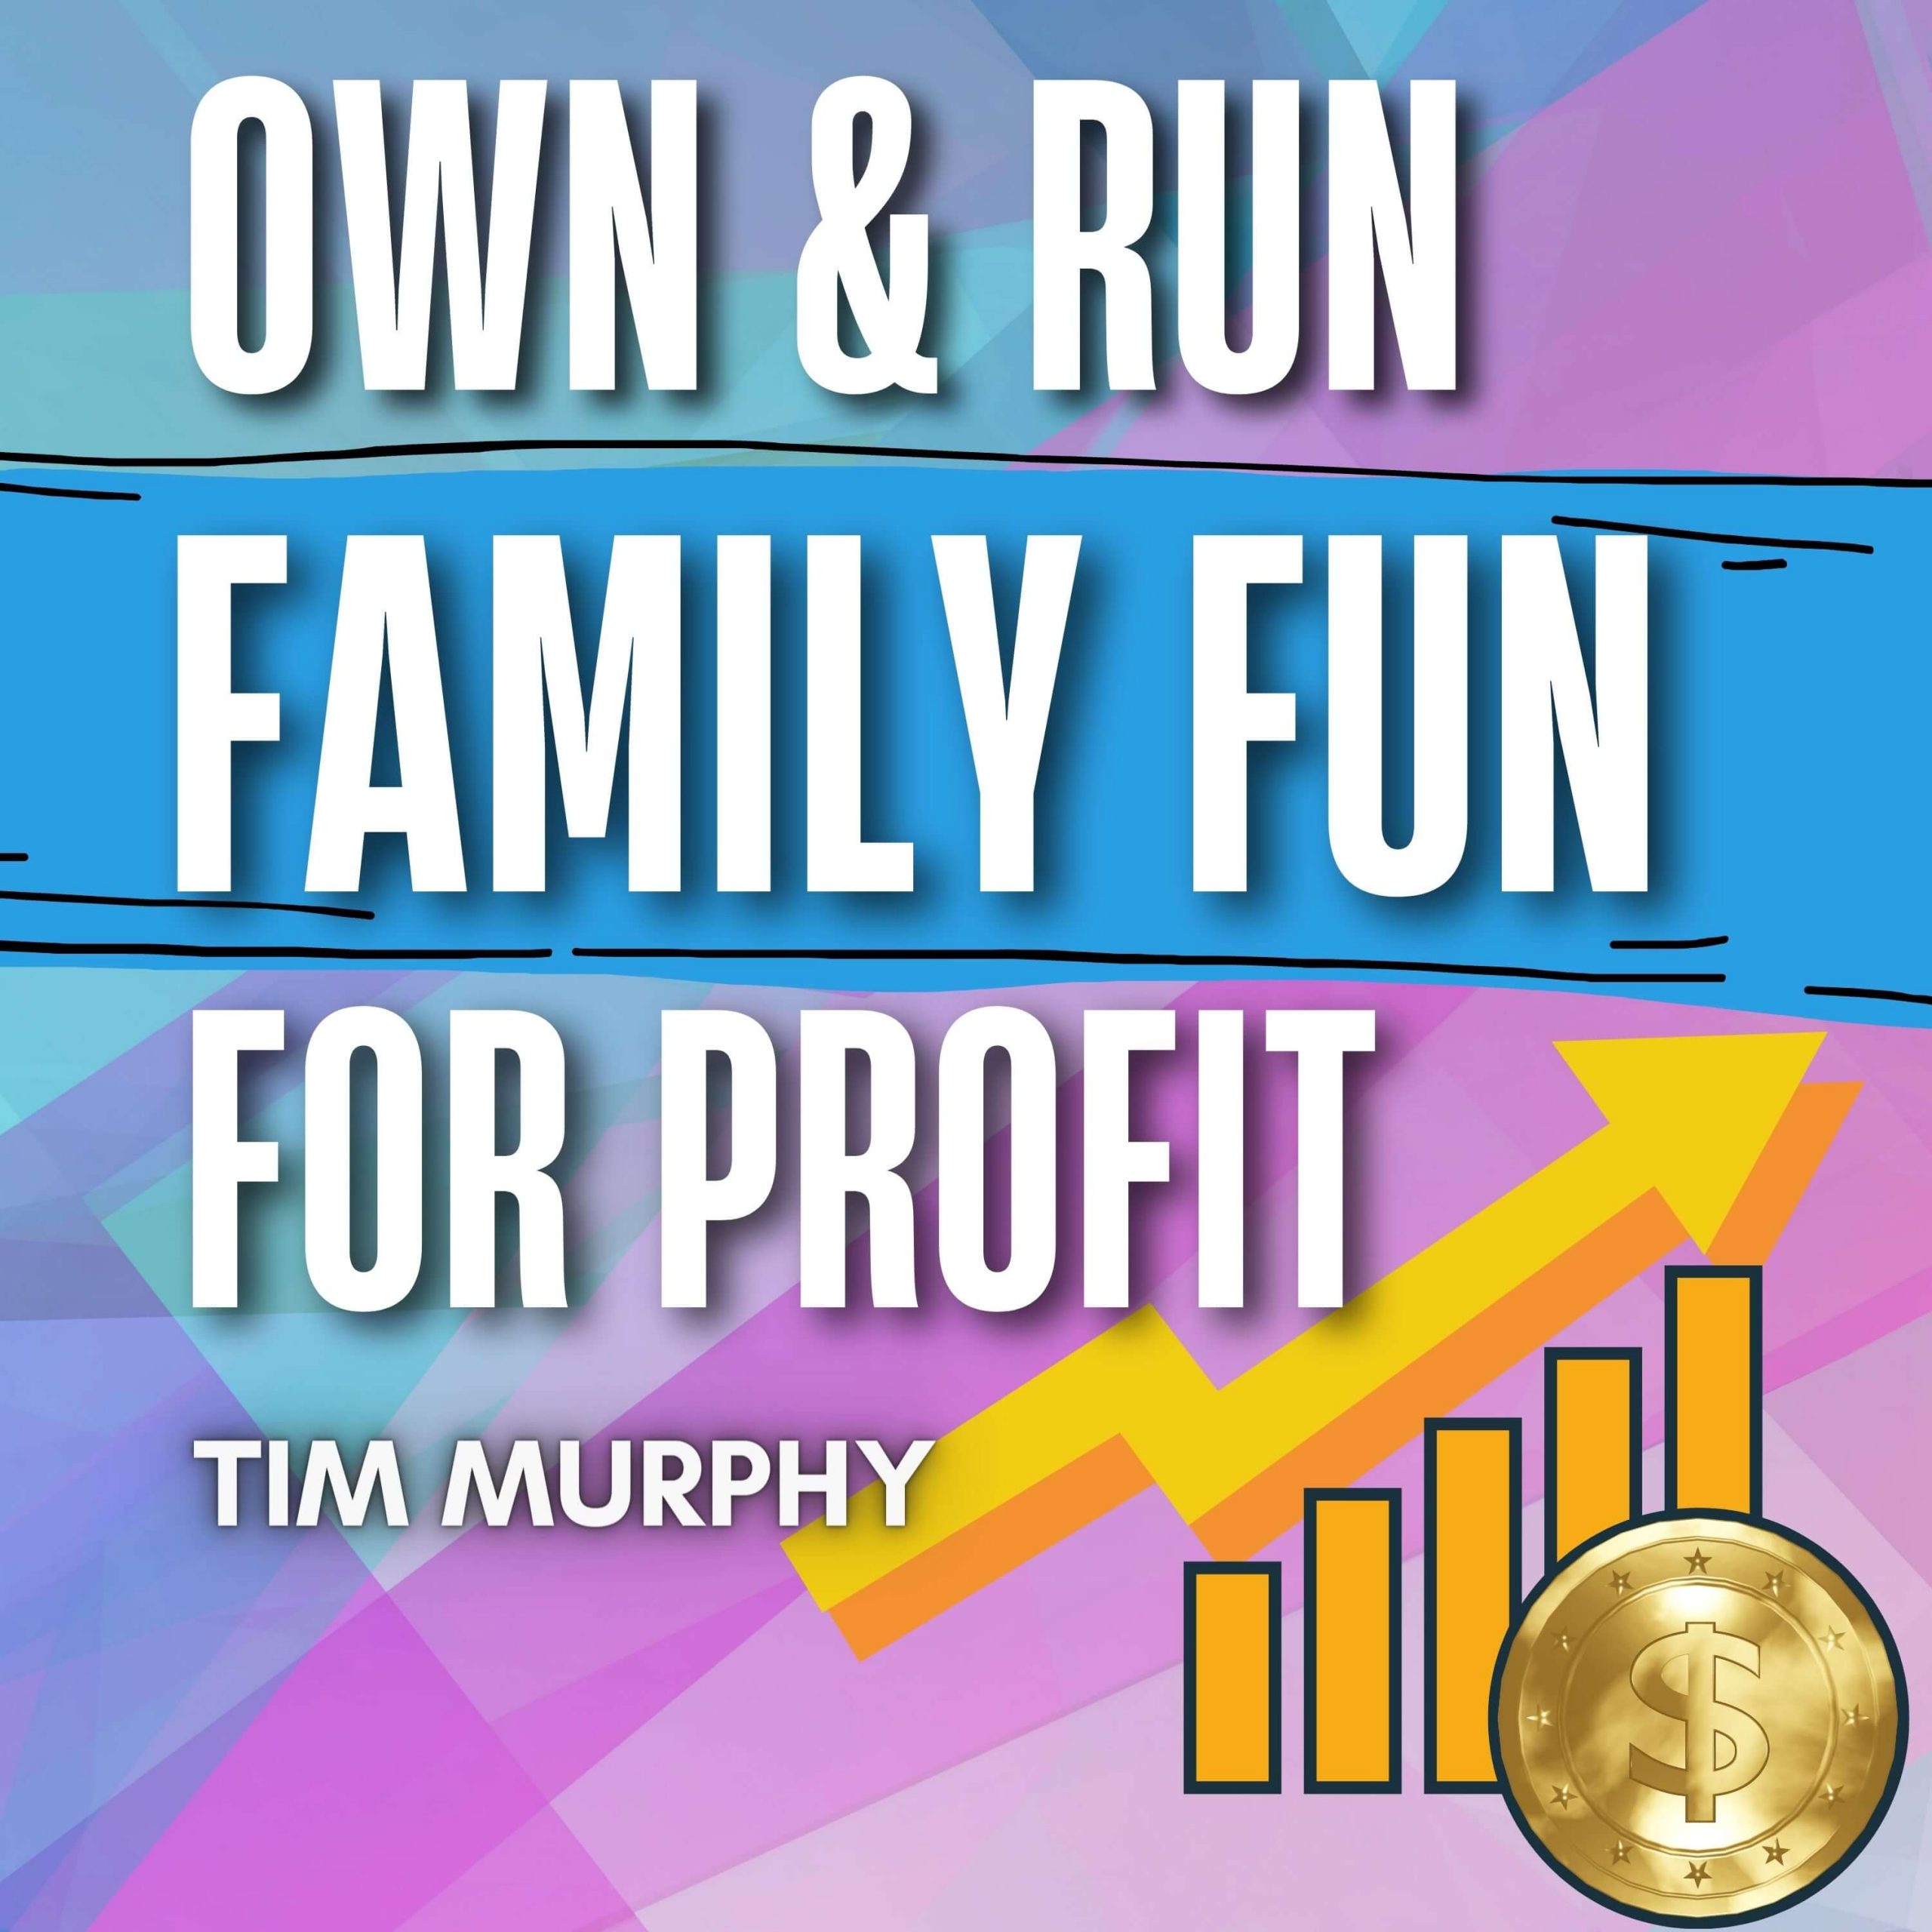 Own & Run Family Fun For Profit